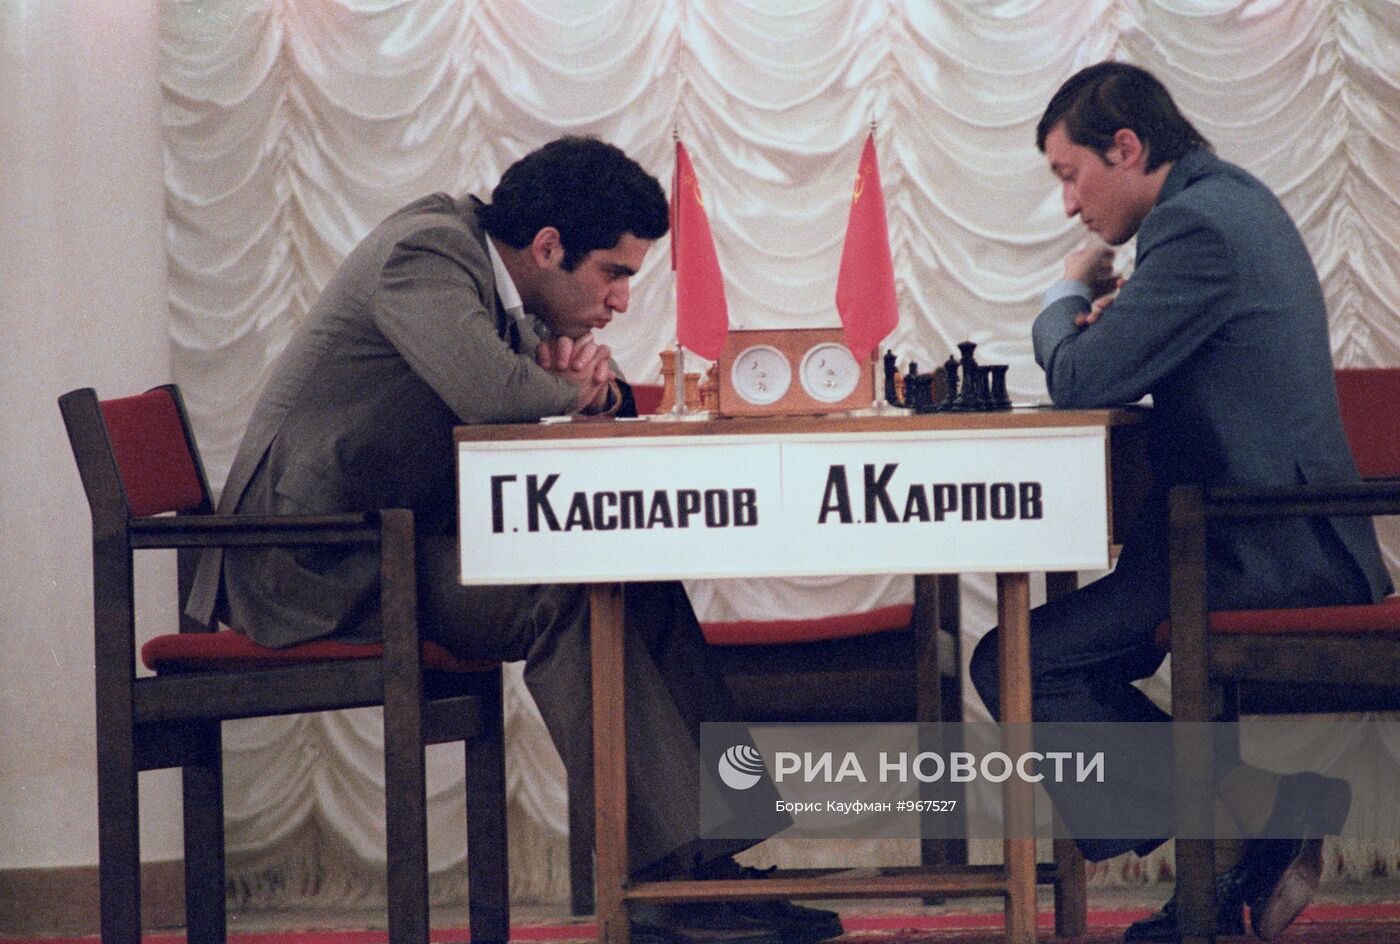 Шахматисты Г. Каспаров и А. Карпов